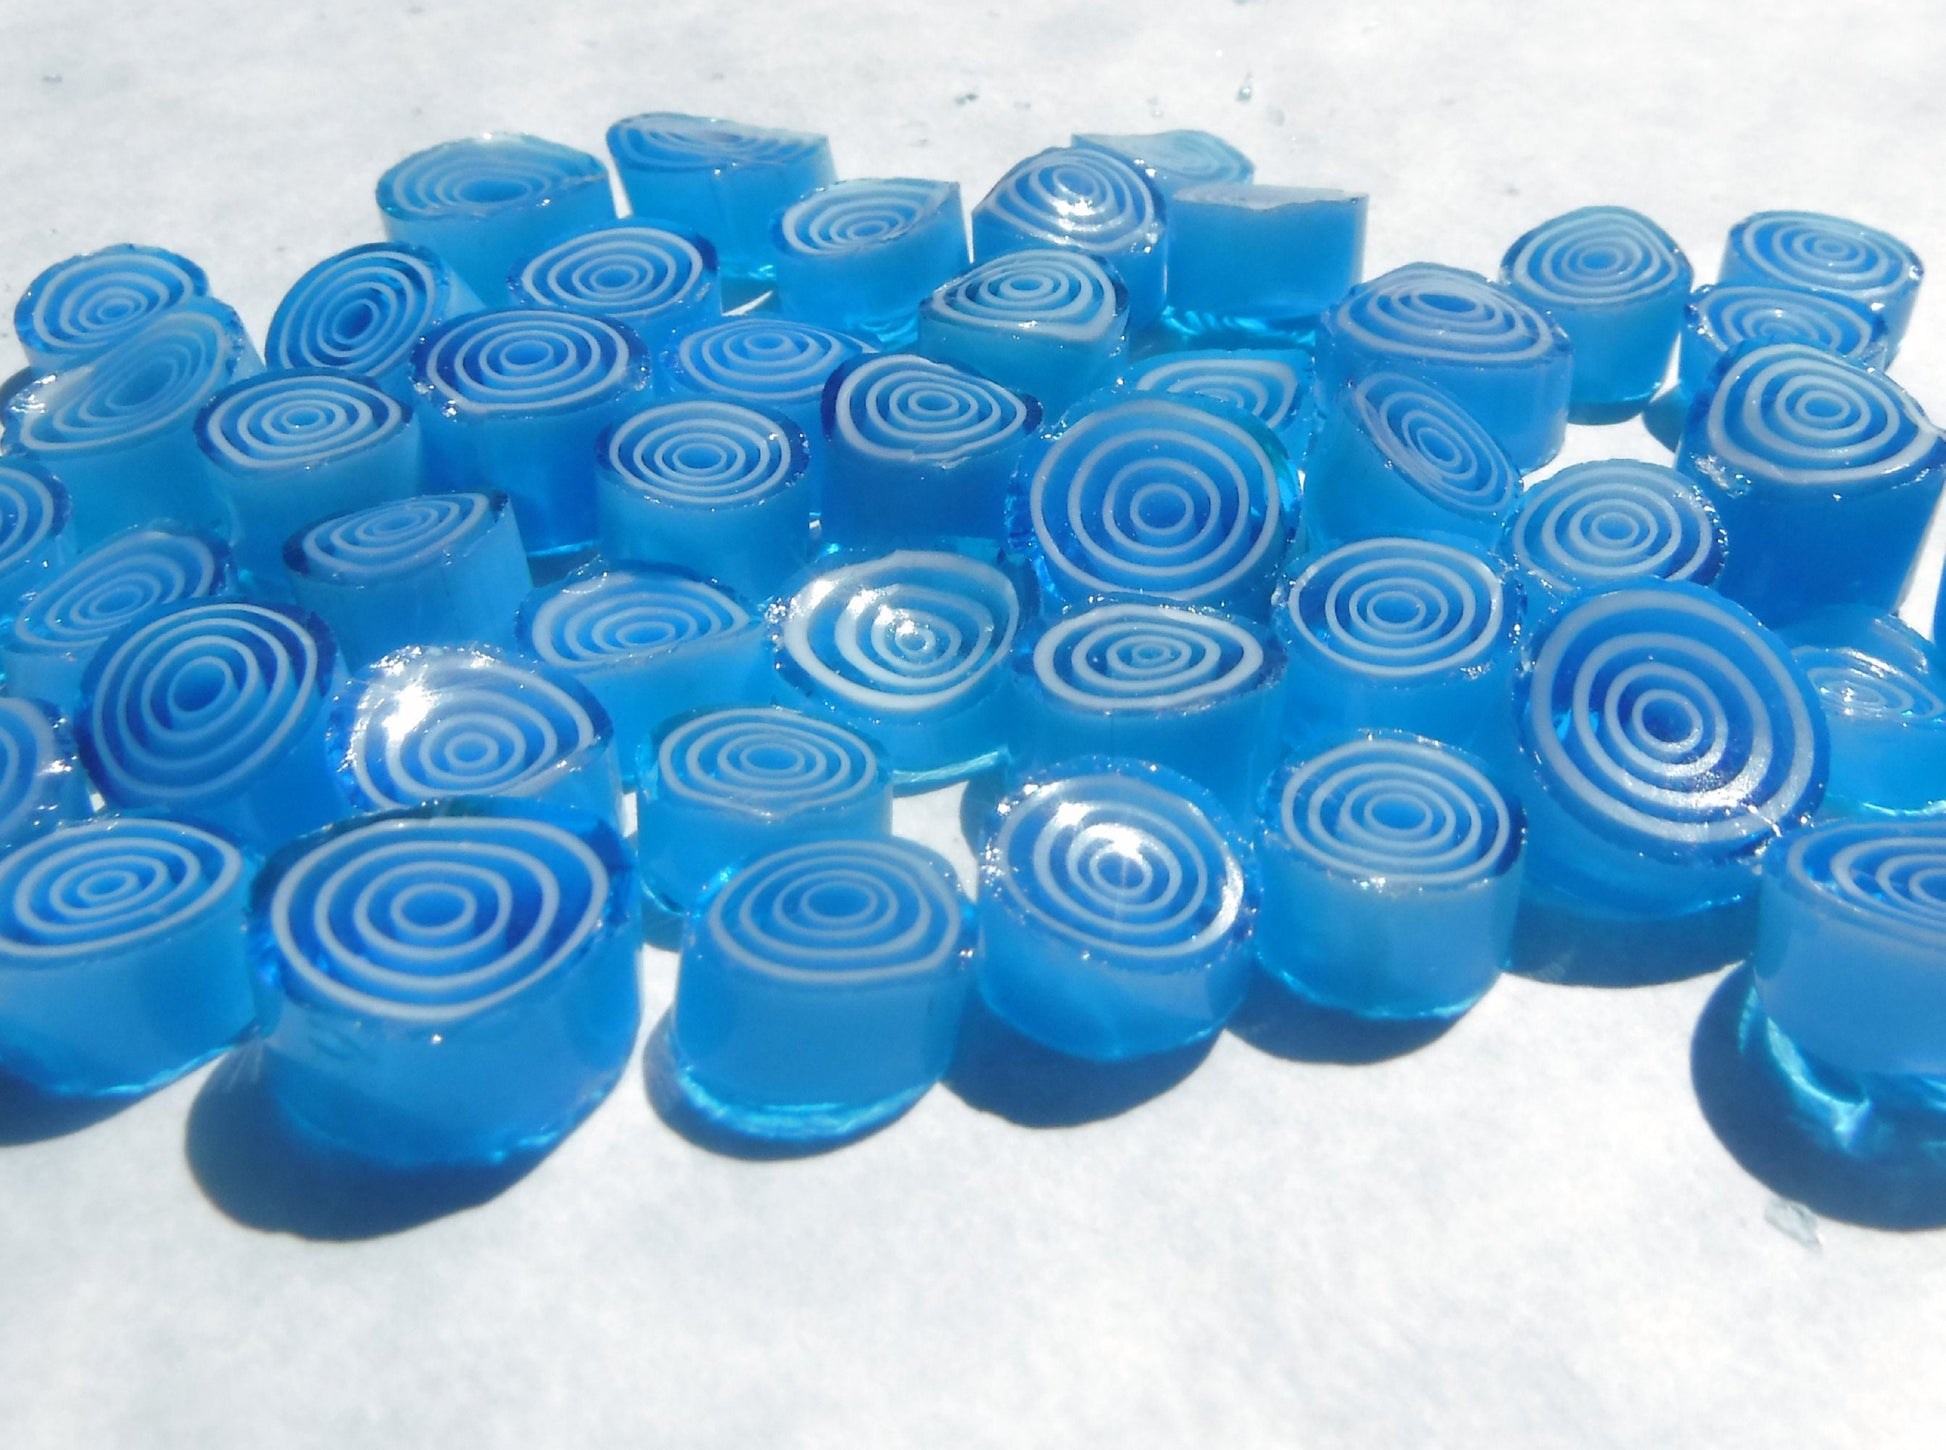 Blue with White Circles Millefiori - 25 grams - Unique Mosaic Glass Tiles